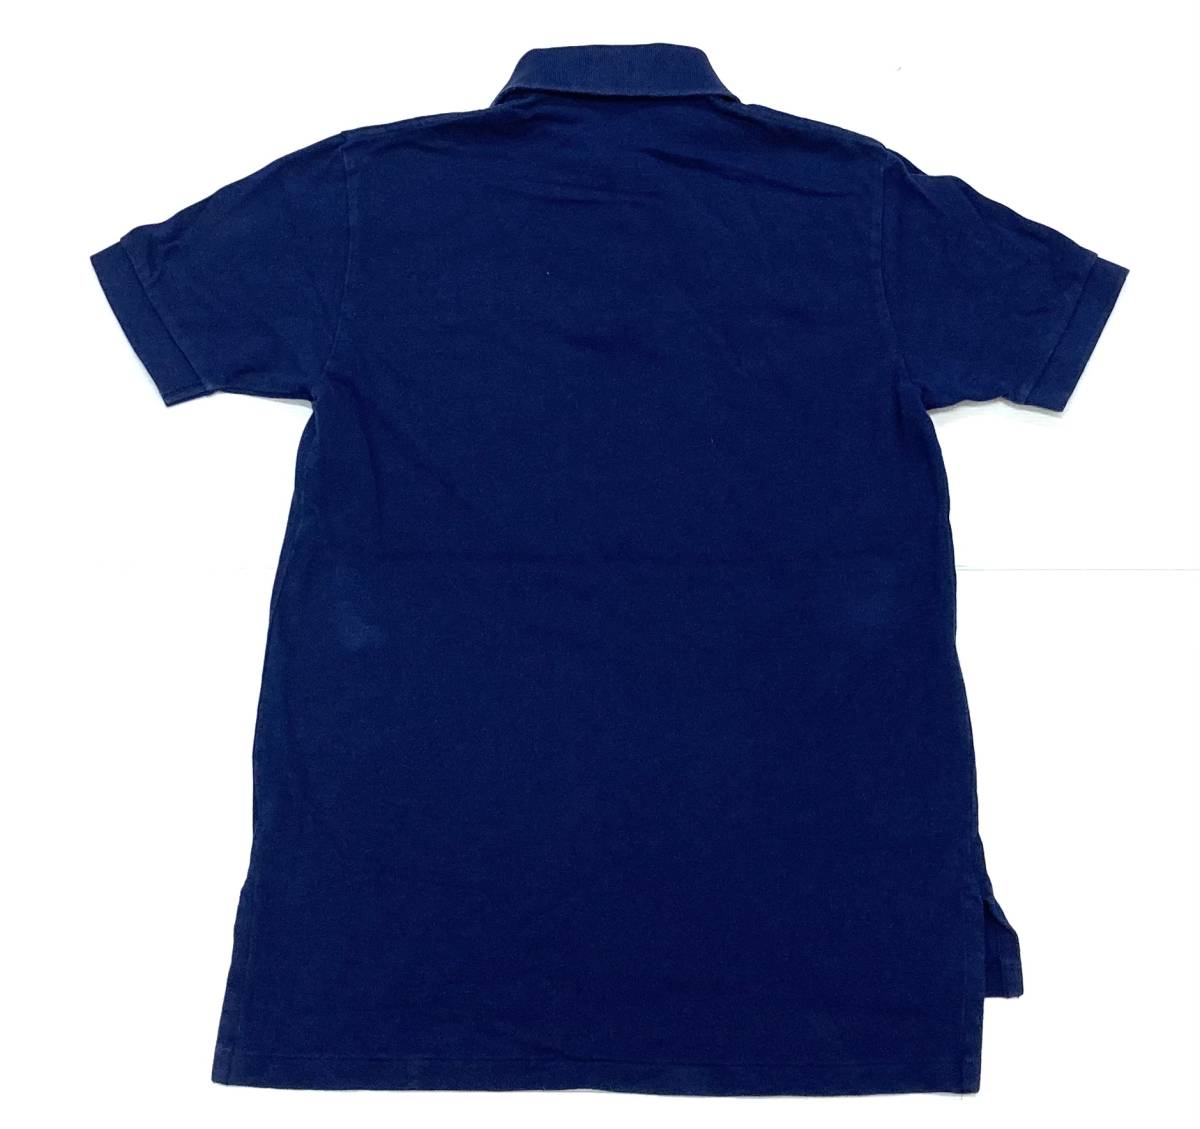  редкий оригинал 90s RL-93 Ralph Lauren рубашка-поло темно-синий M Ralph Lauren Vintage архив товар 